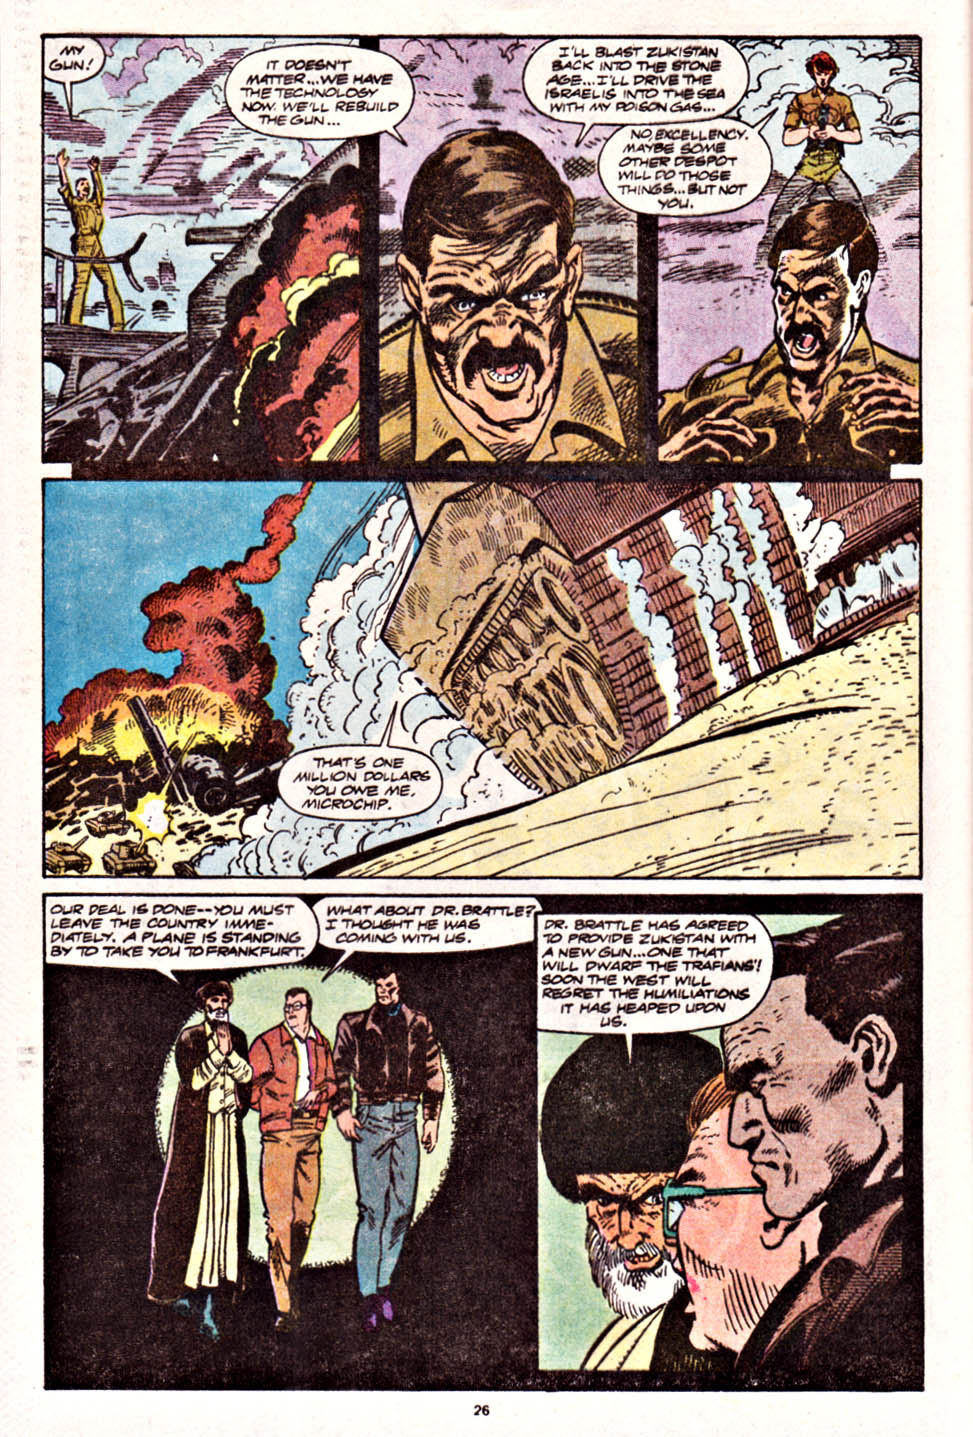 The Punisher (1987) Issue #48 - The Brattle Gun #02 #55 - English 19